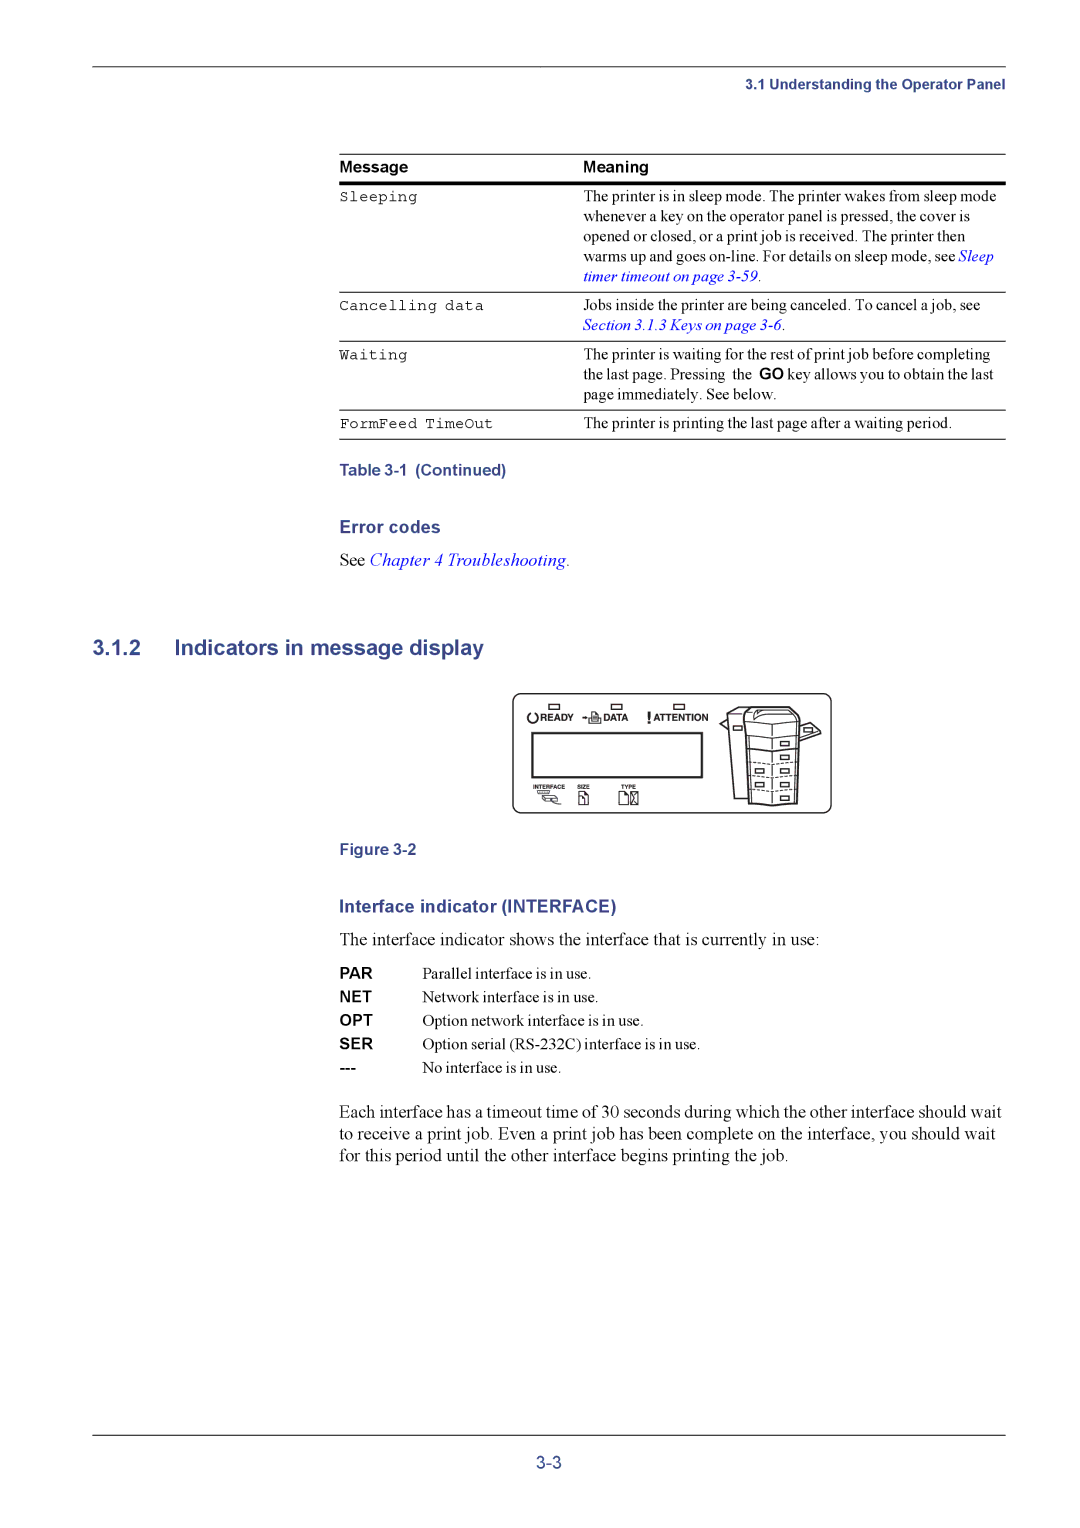 Kyocera FS-C8026N manual Indicators in message display, Error codes, Interface indicator Interface 